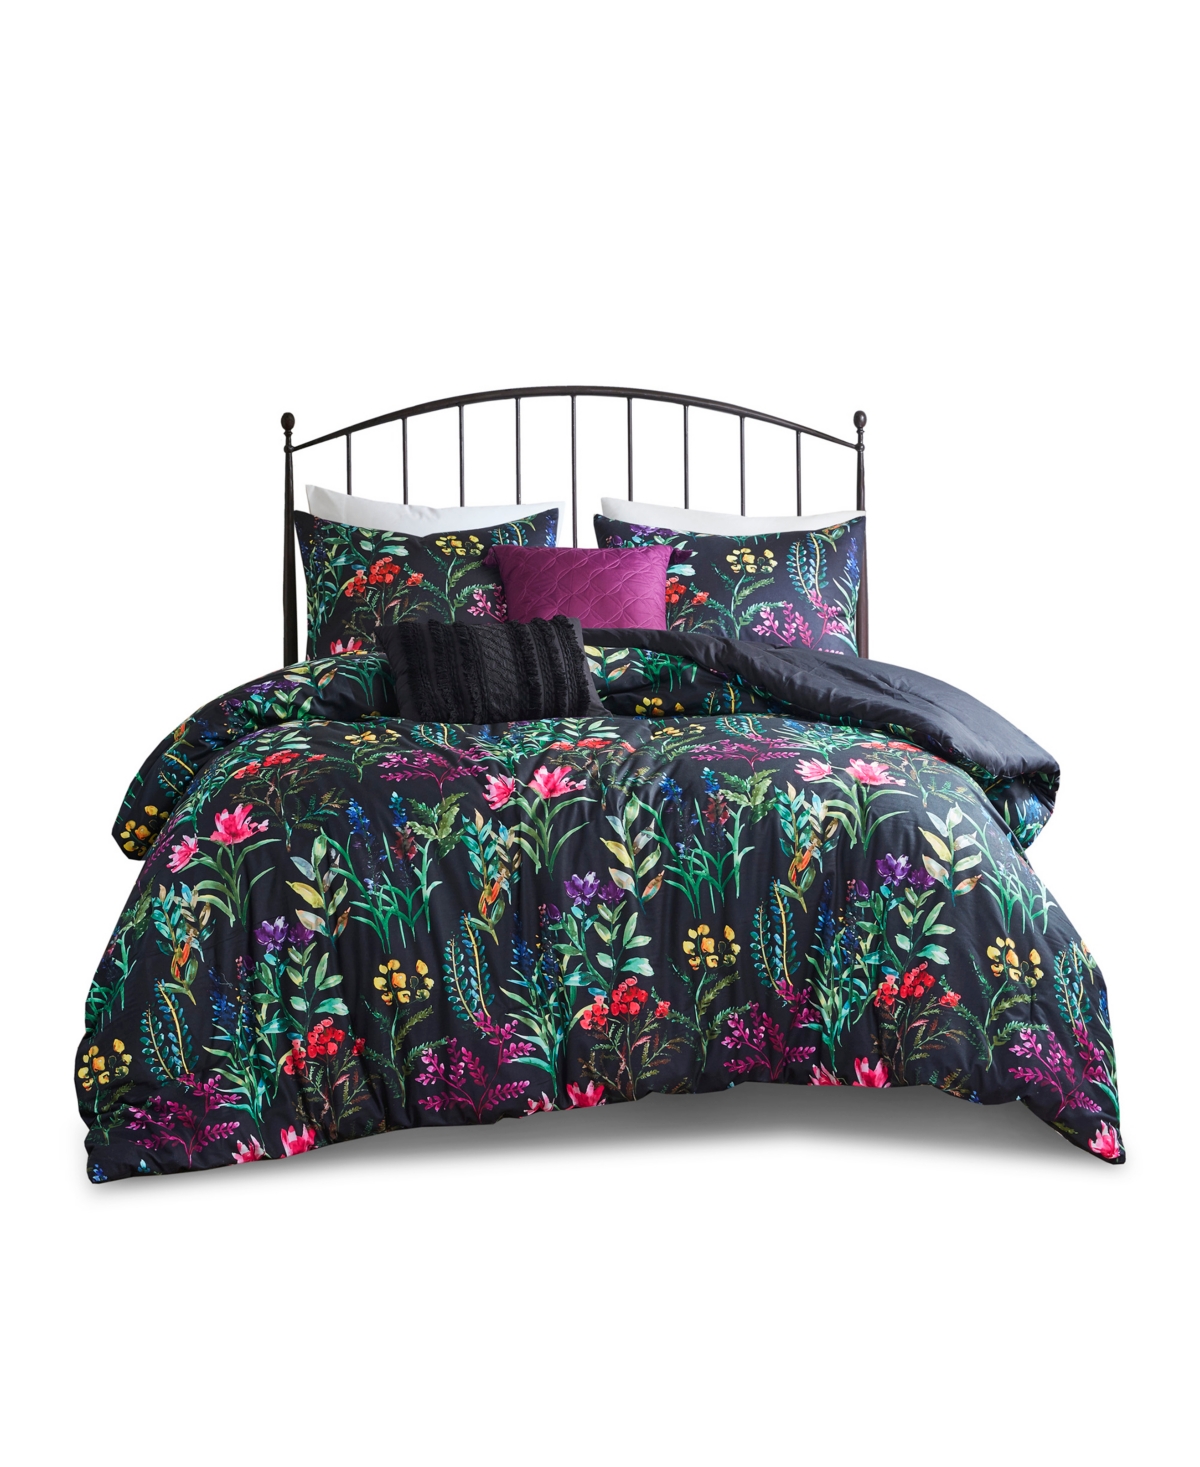 Madison Park Tasha Floral 5 Piece Comforter Set, King/california King Bedding In Black